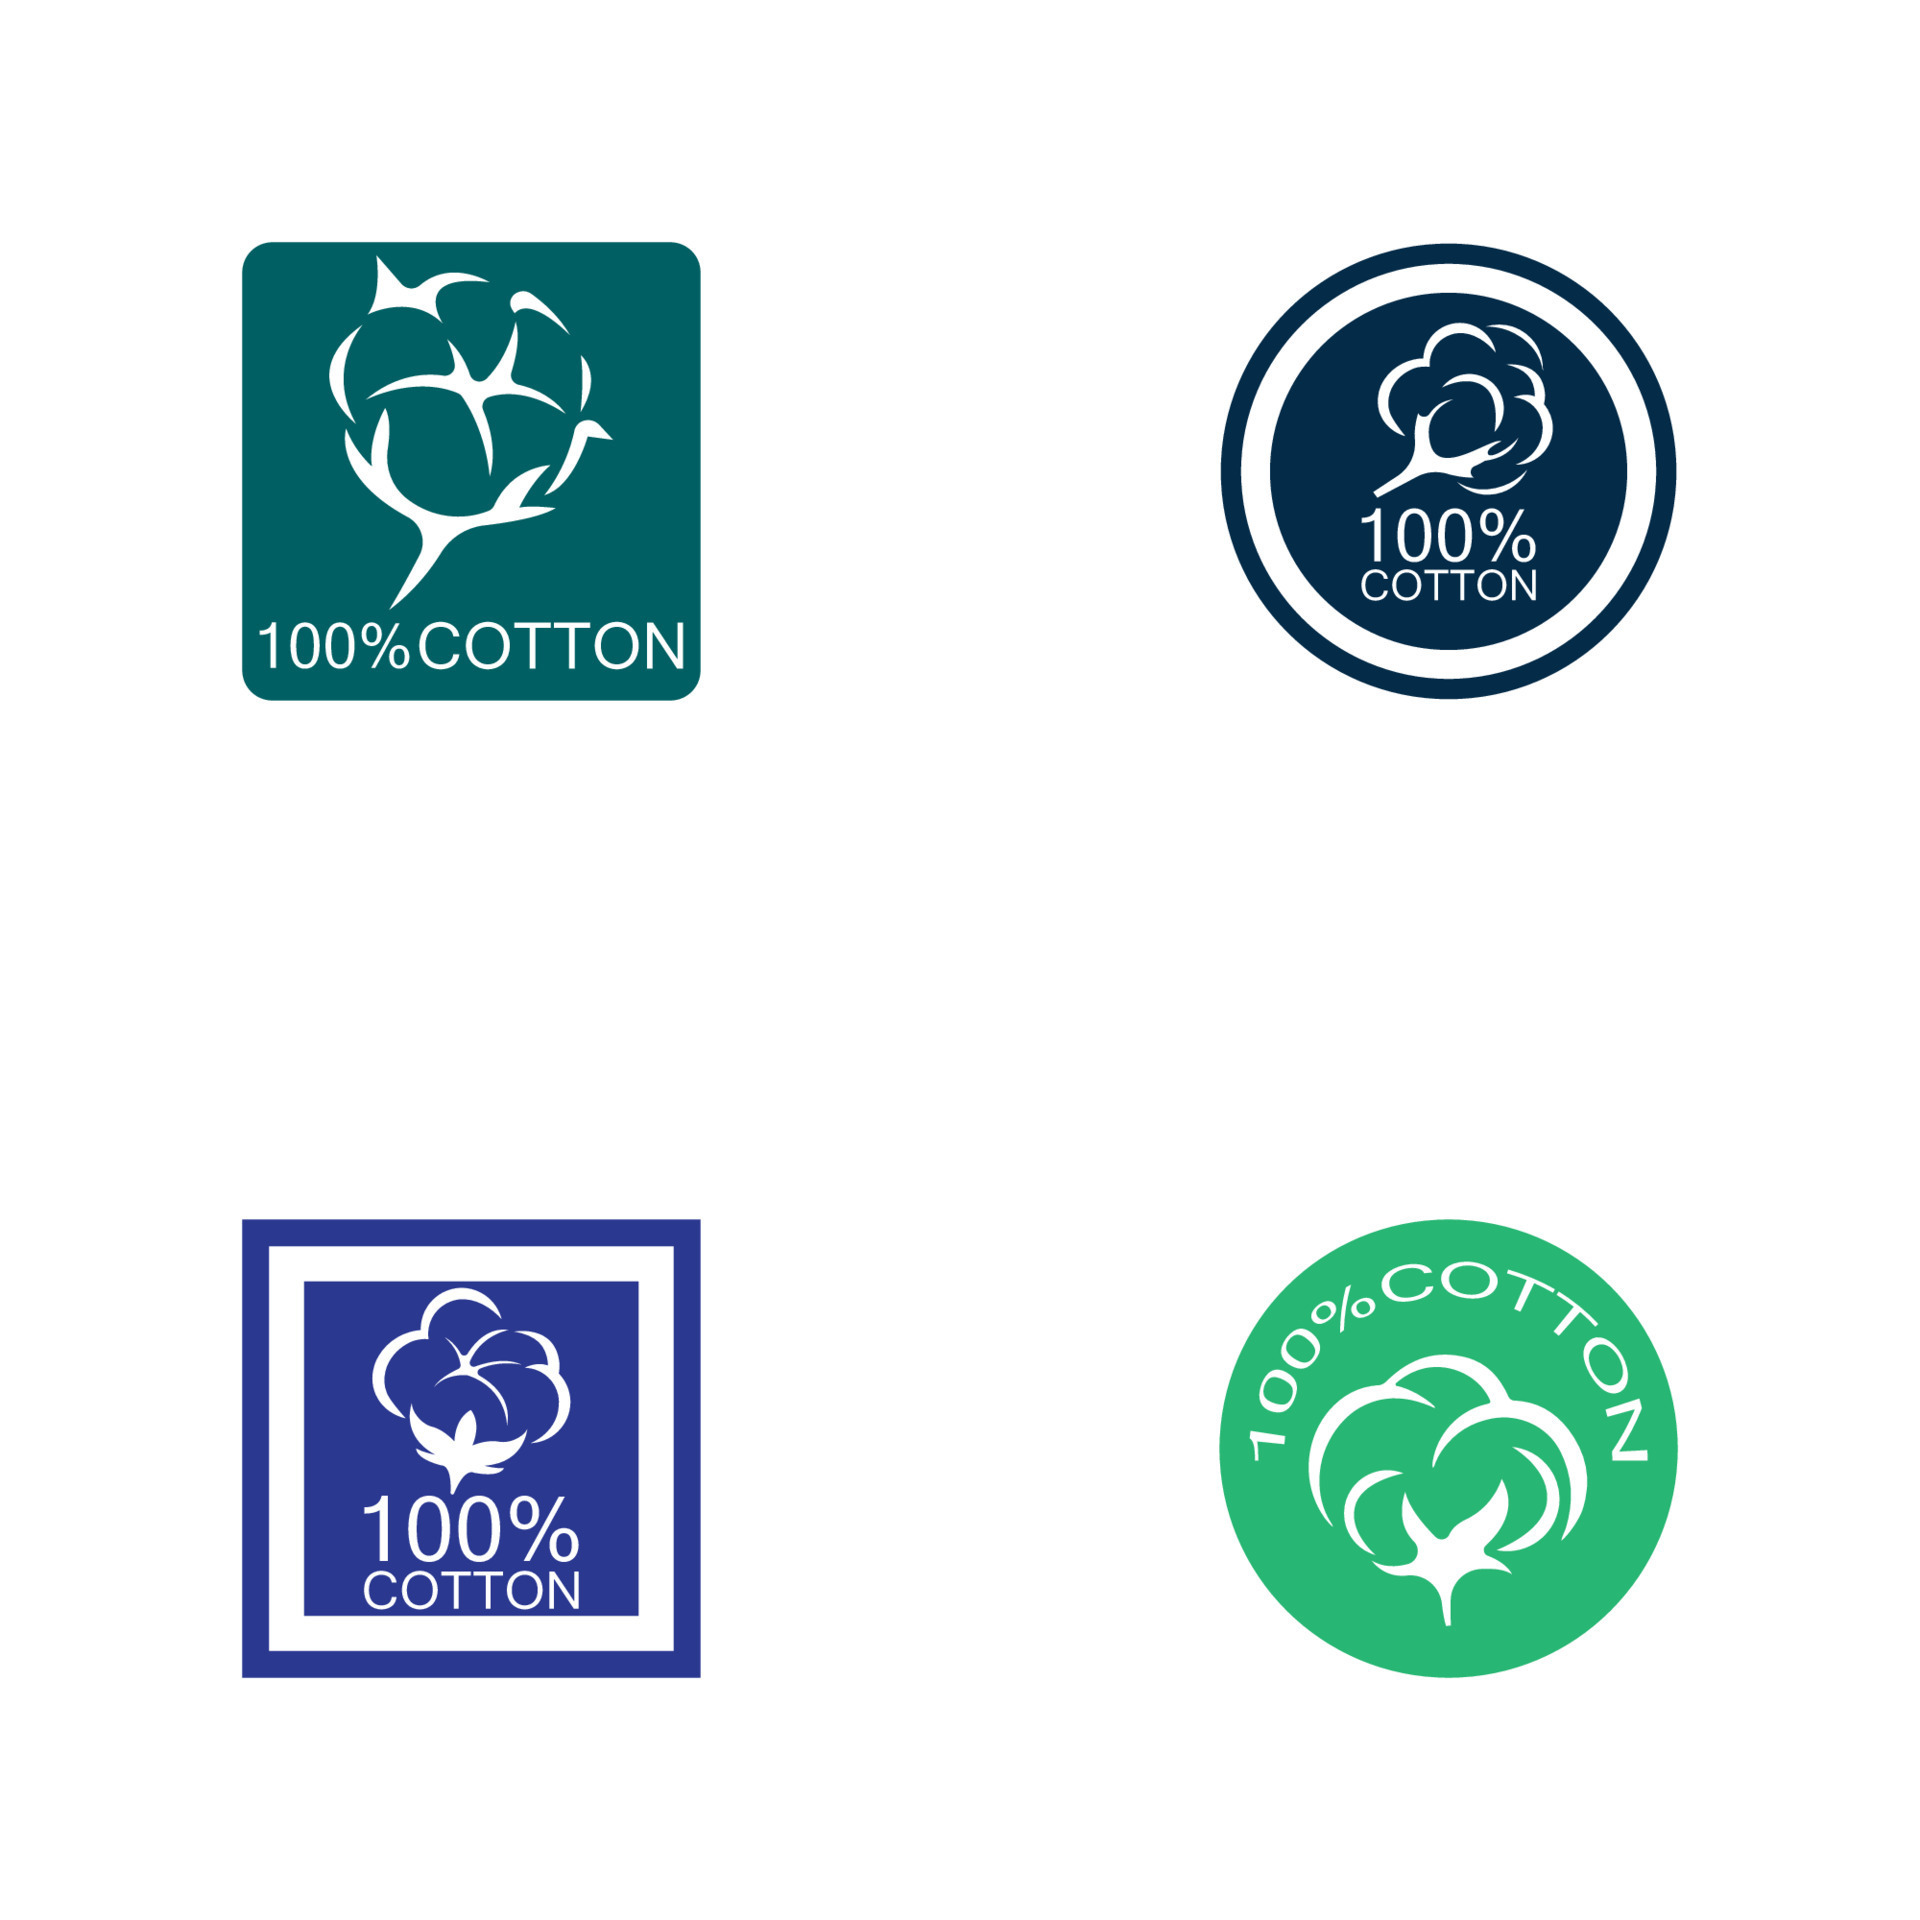 https://static.vecteezy.com/system/resources/previews/017/743/393/original/100-percent-cotton-icon-natural-organic-cotton-pure-cotton-labels-logo-illustration-free-vector.jpg